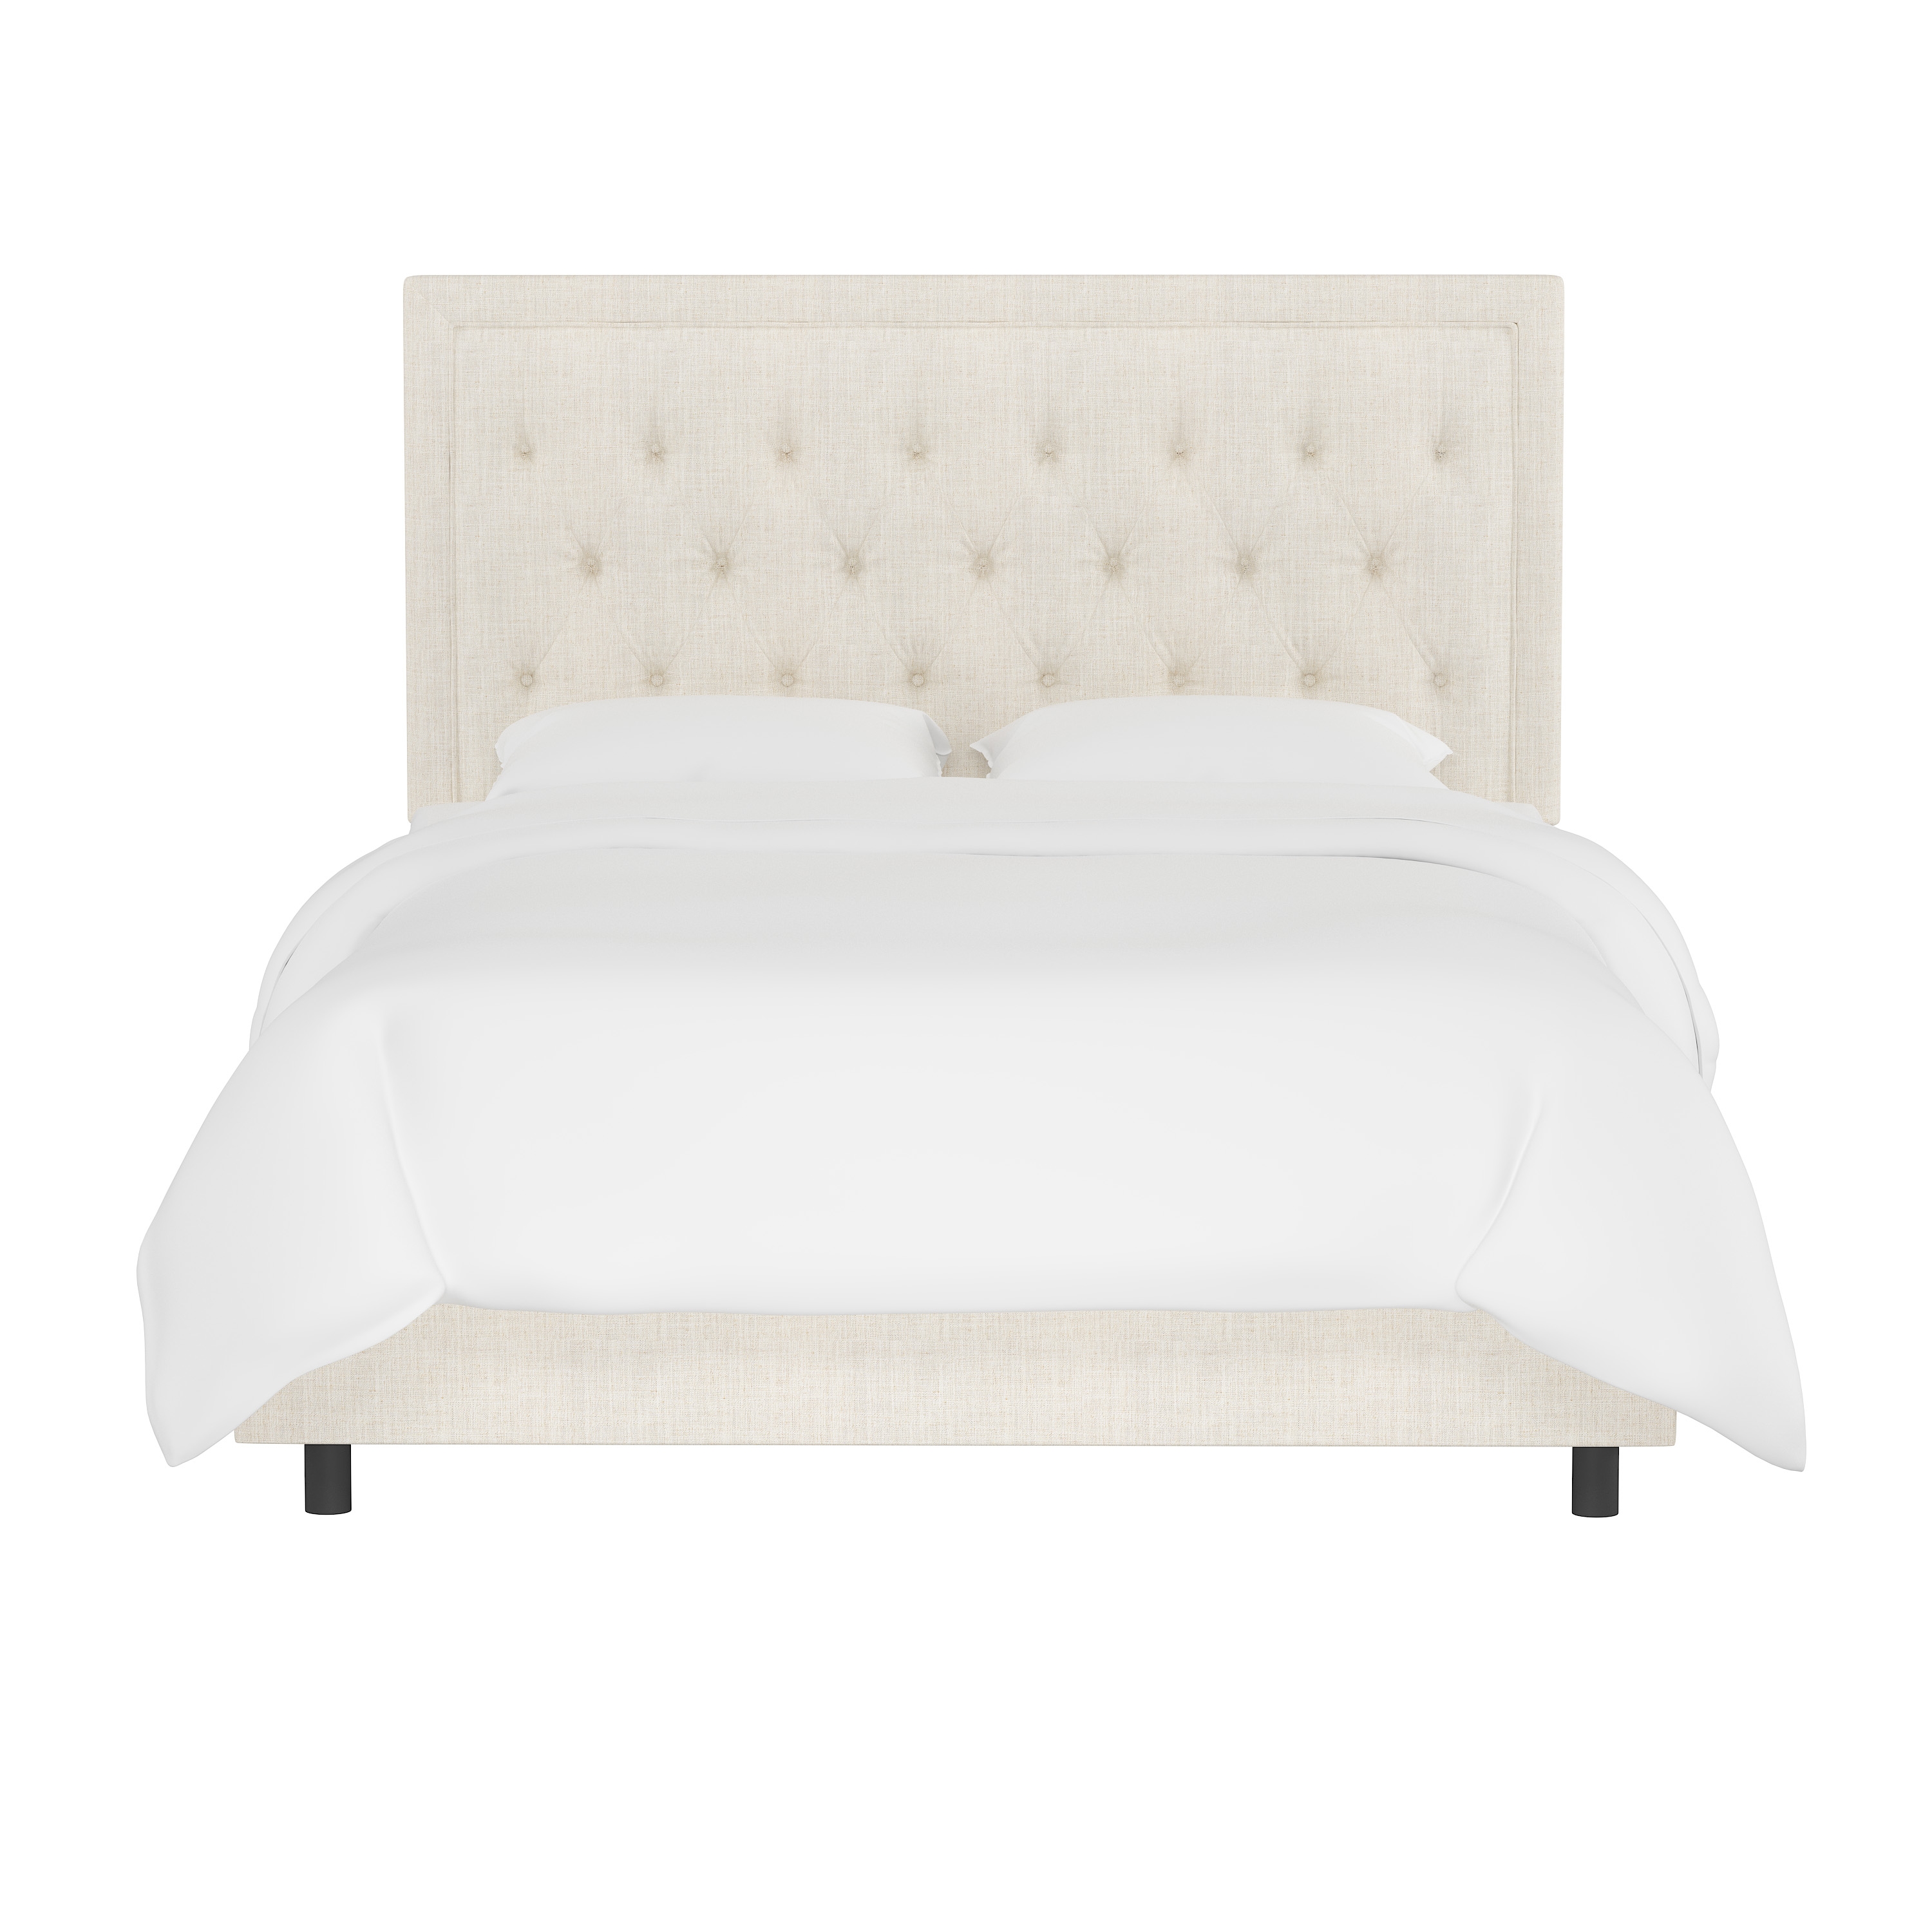 Lafayette Bed, Full, Talc - Image 1